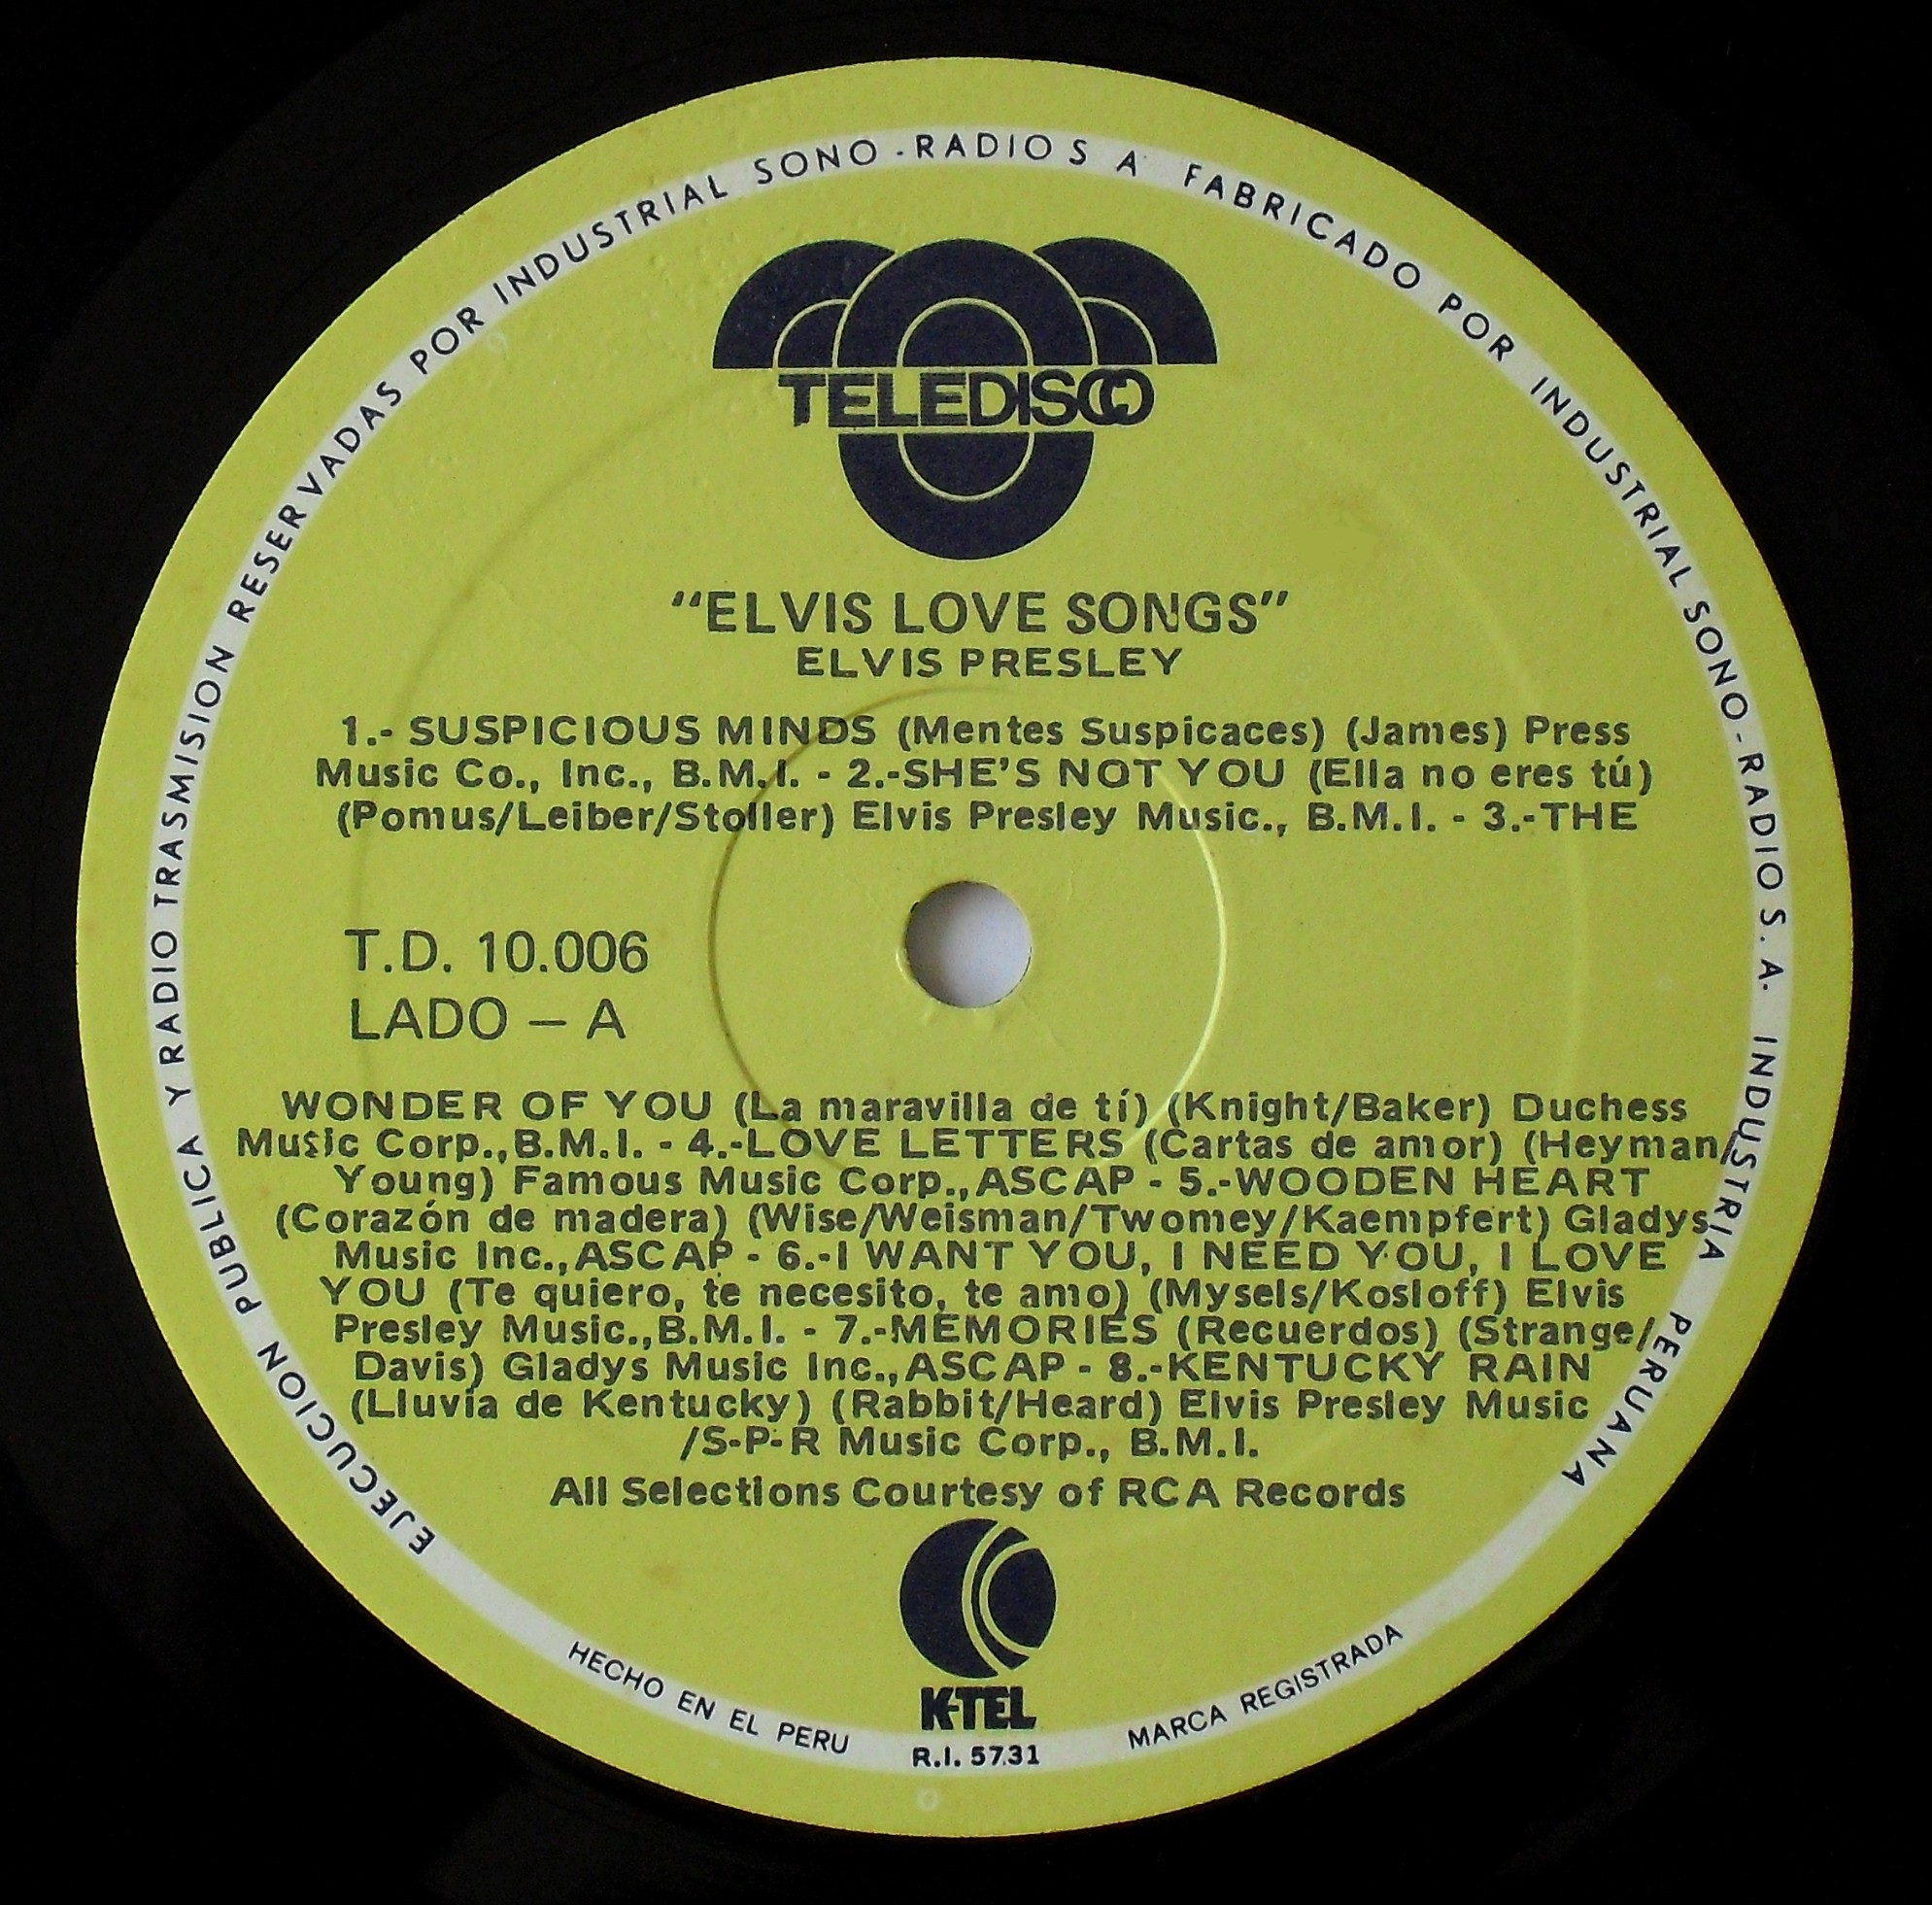 Peru - ELVIS LOVE SONGS 03gcpec